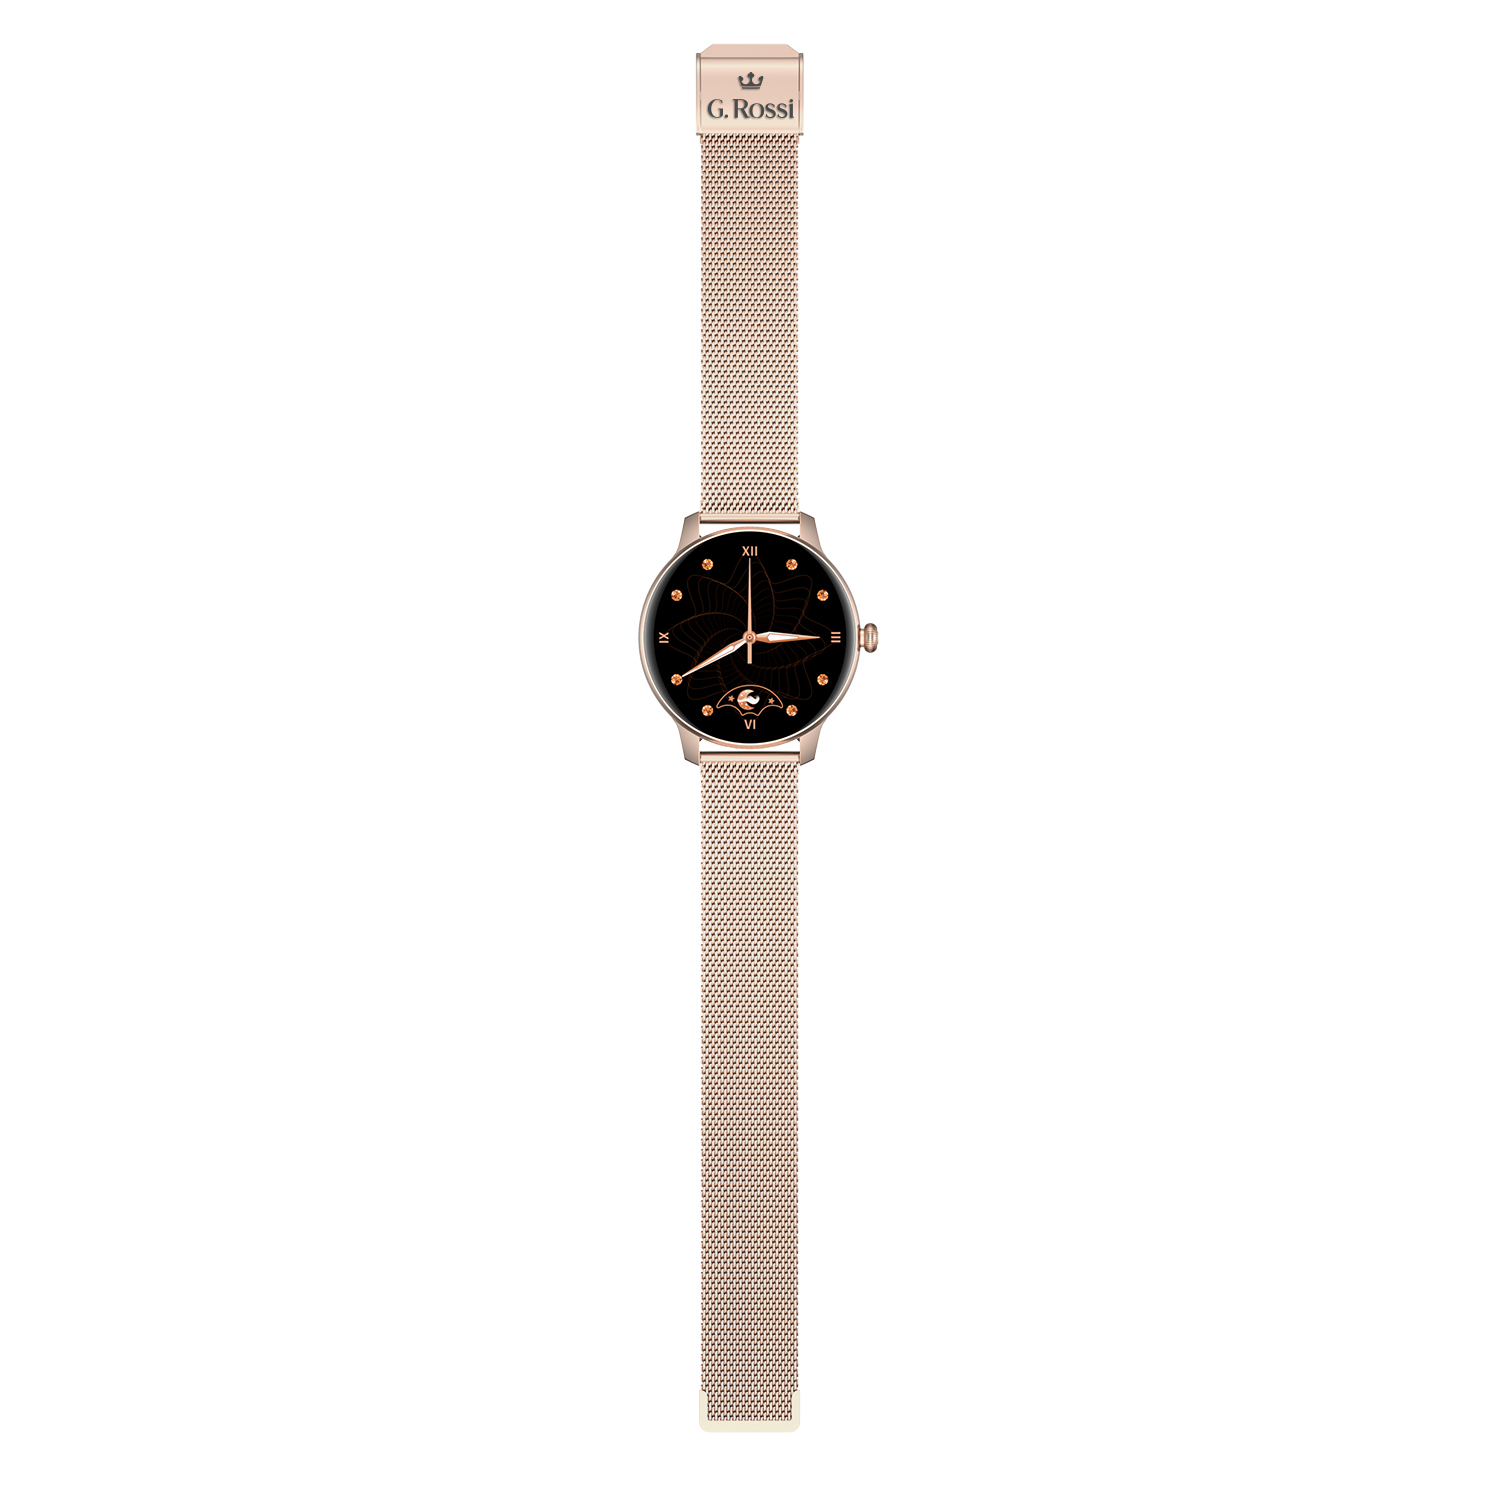  Zegarek SMARTWATCH G. Rossi SW020-1PW + biały pasek